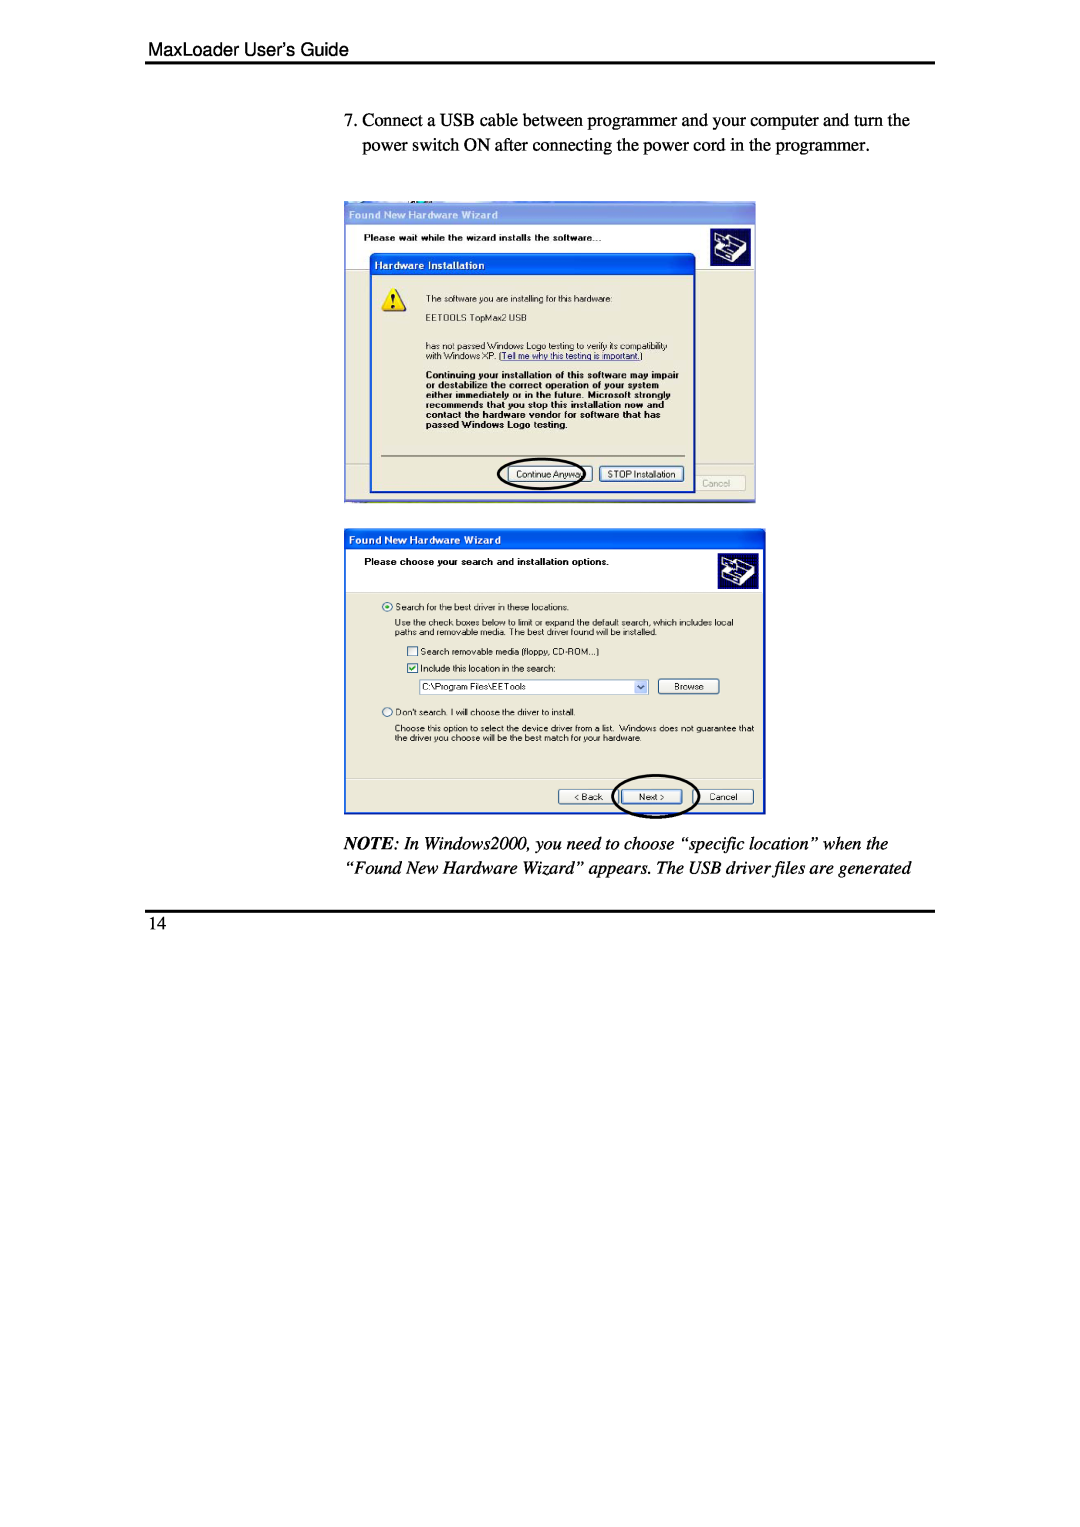 IBM manual MaxLoader User’s Guide 